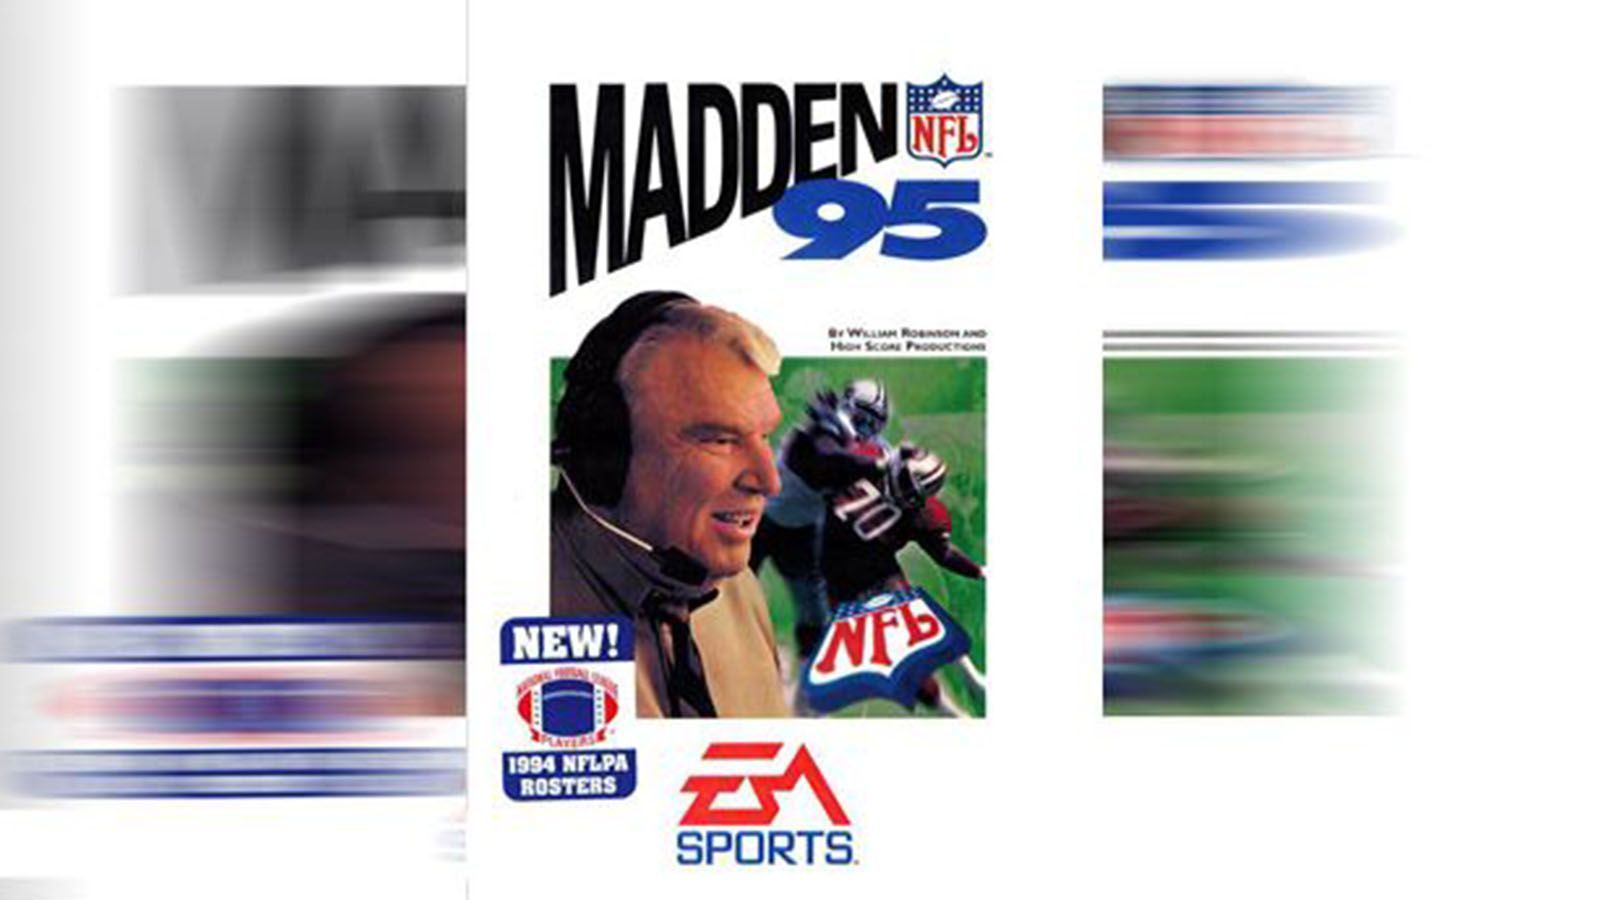 
                <strong>Madden NFL 95</strong><br>
                Madden NFL 95 - Cover: John Madden.
              